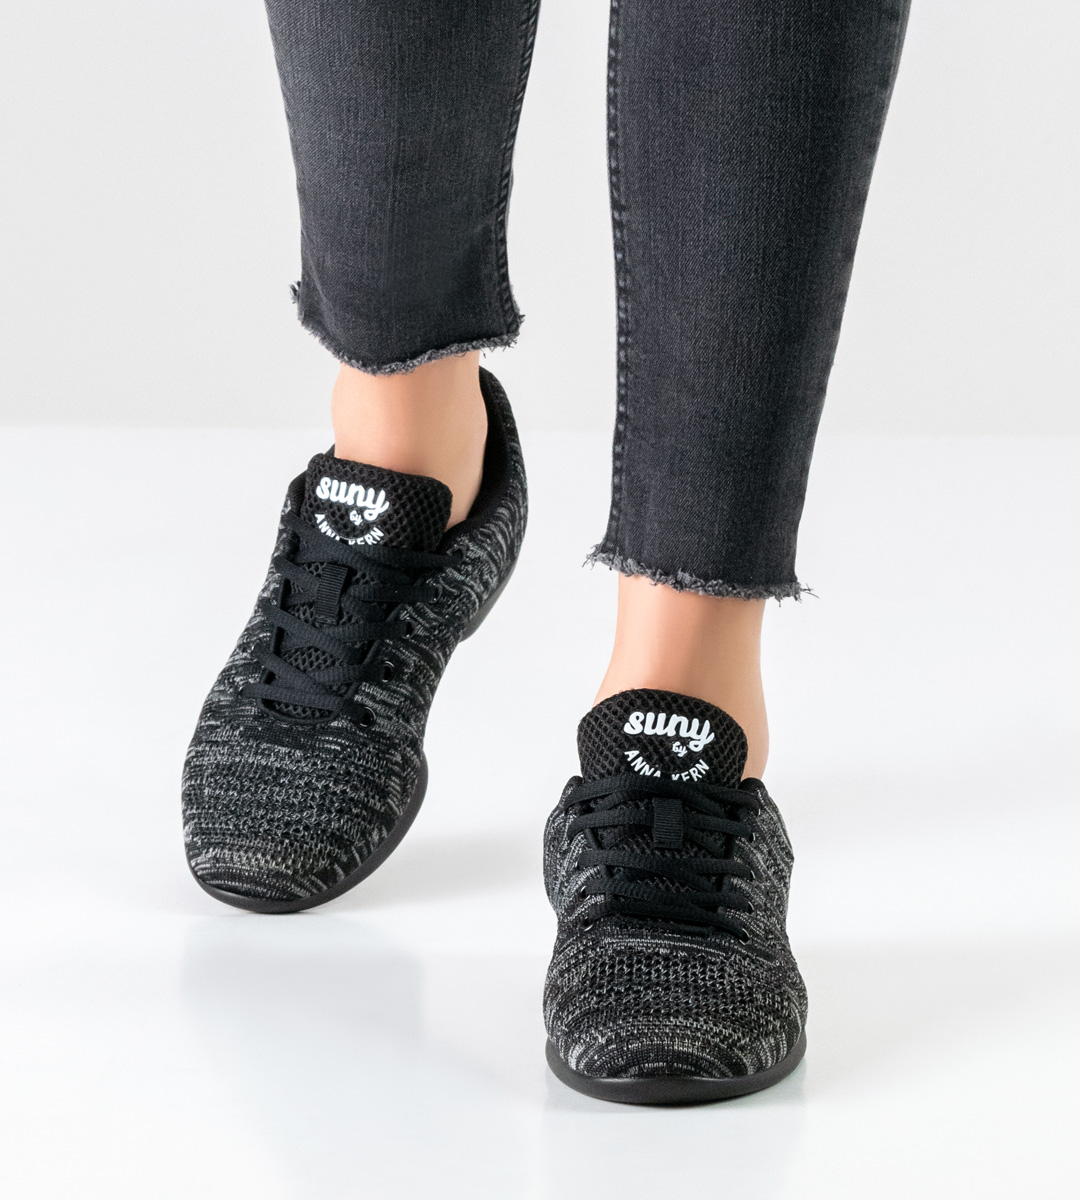 Traings Damentanz Sneaker von Suny in Kombination mit schwarzer Hose